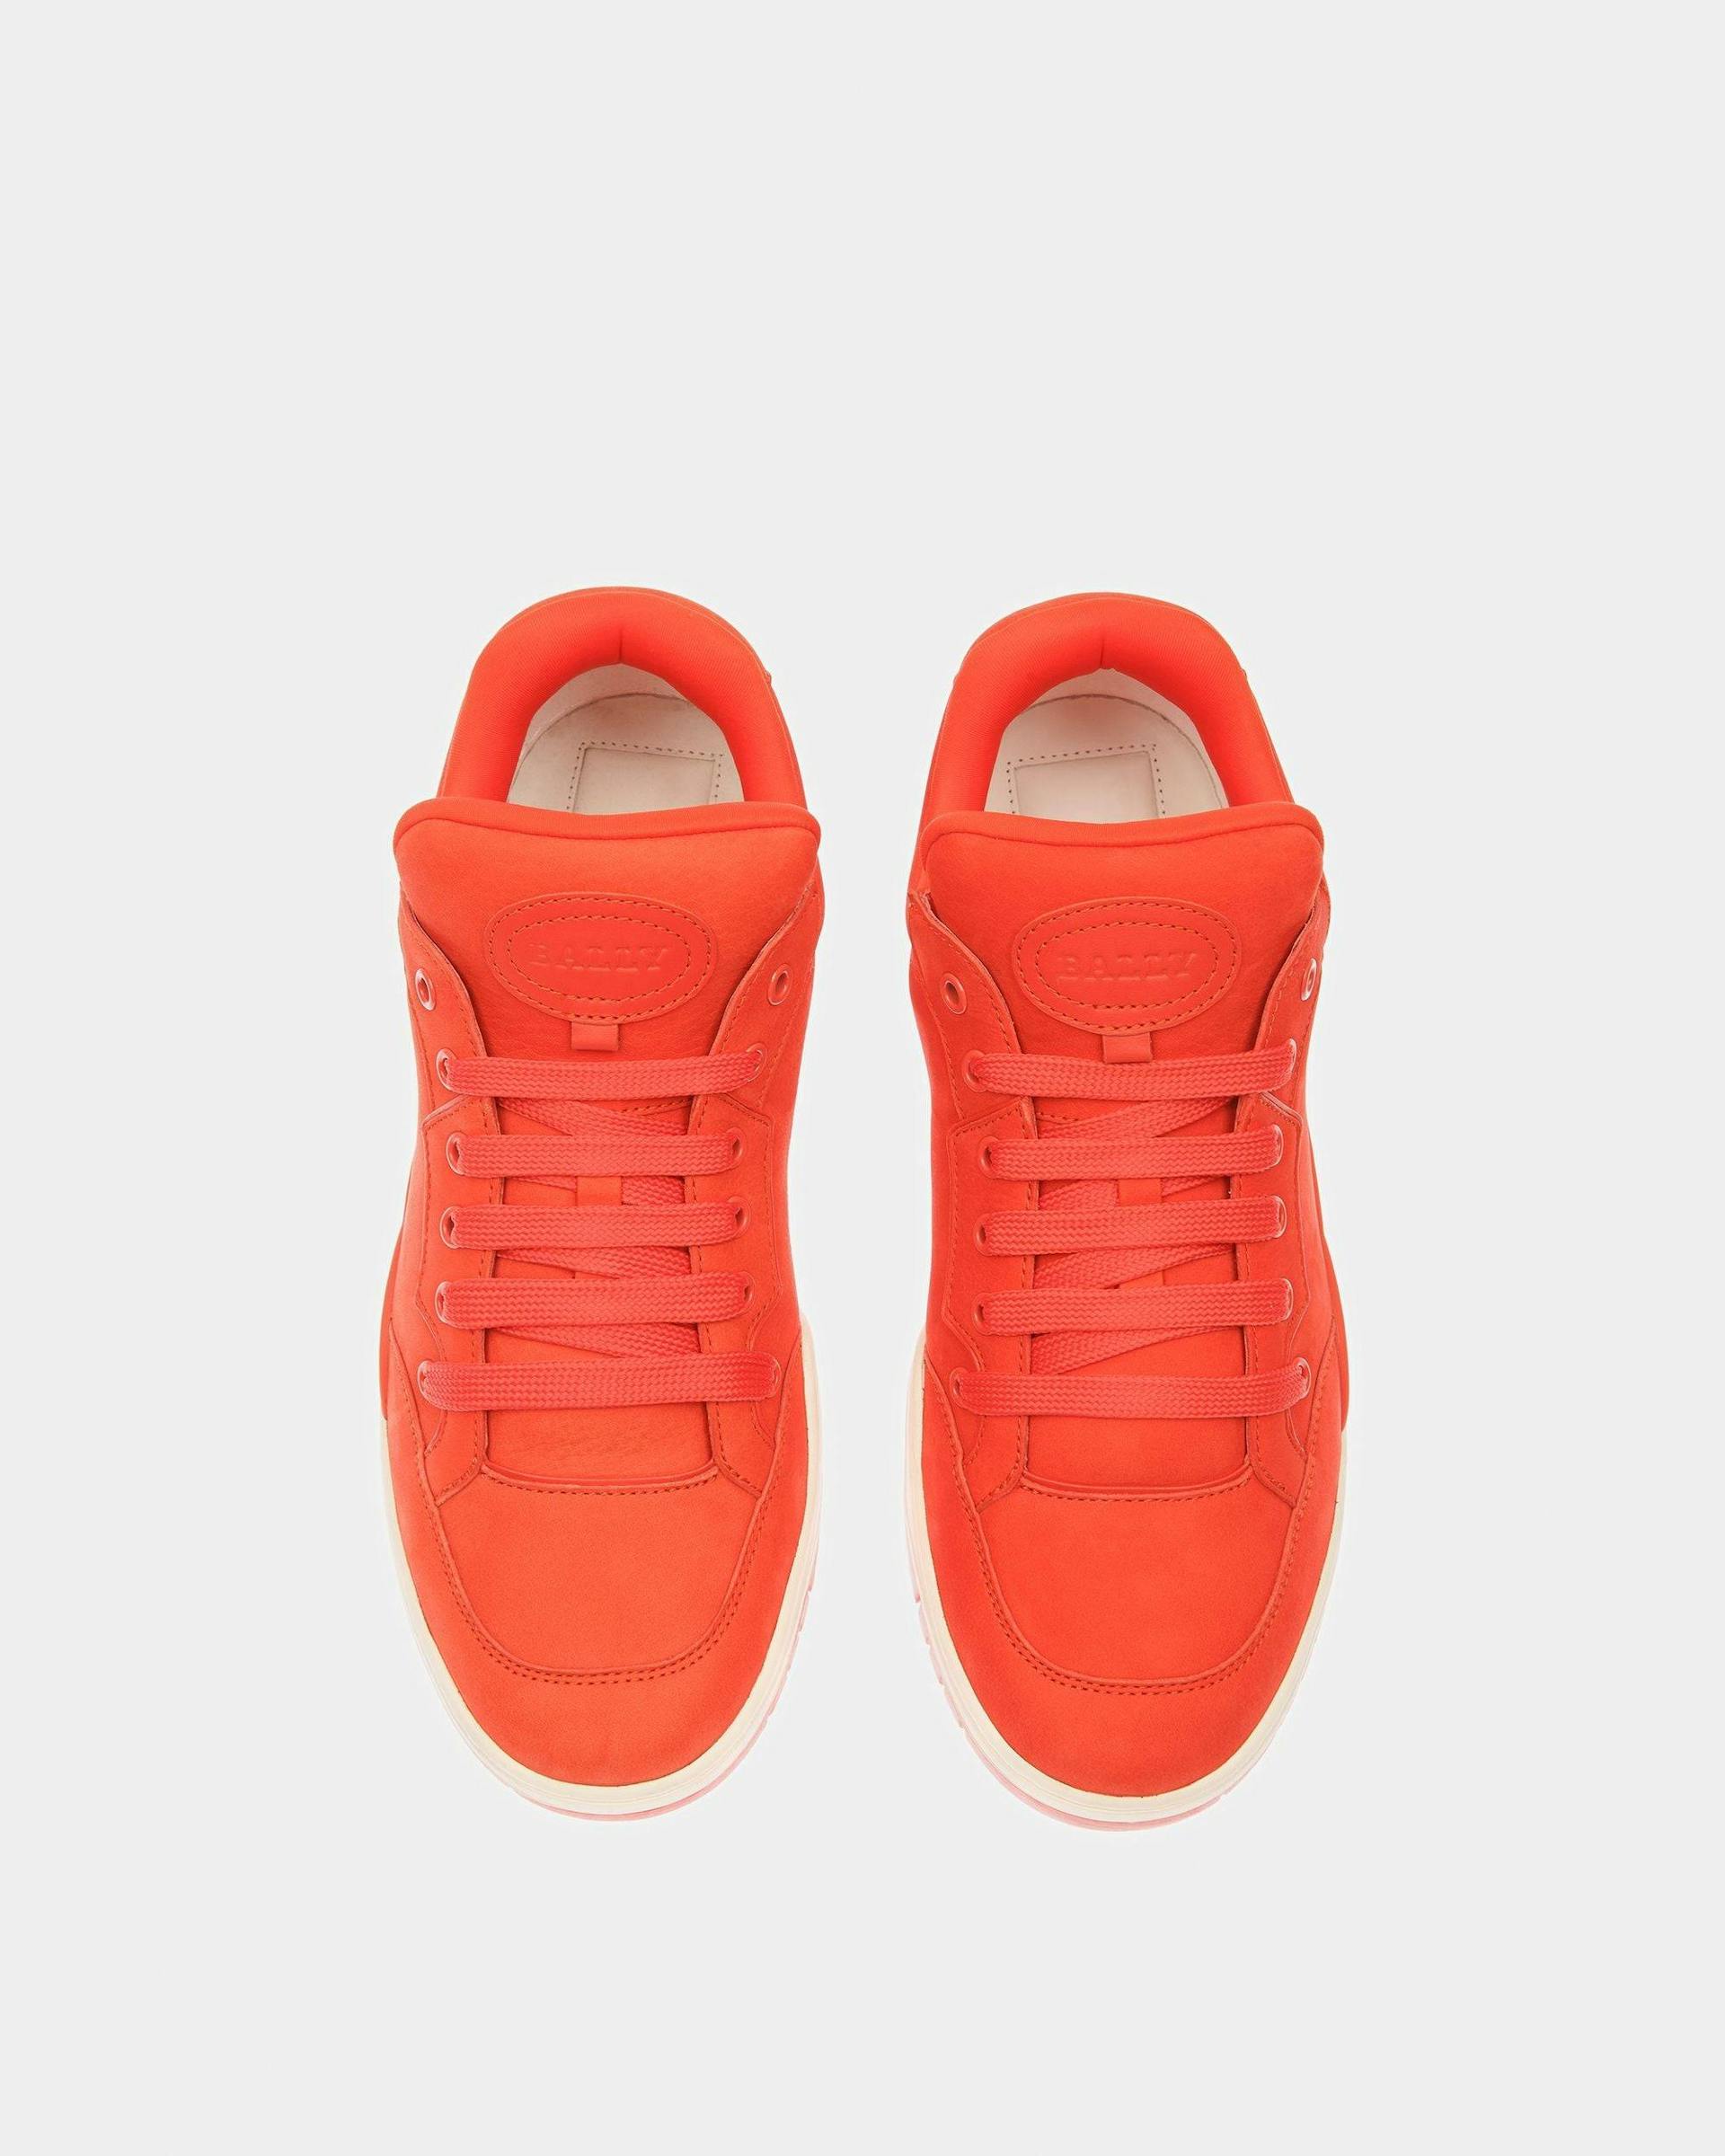 Kiro Leather Sneakers In Orange - Men's - Bally - 02